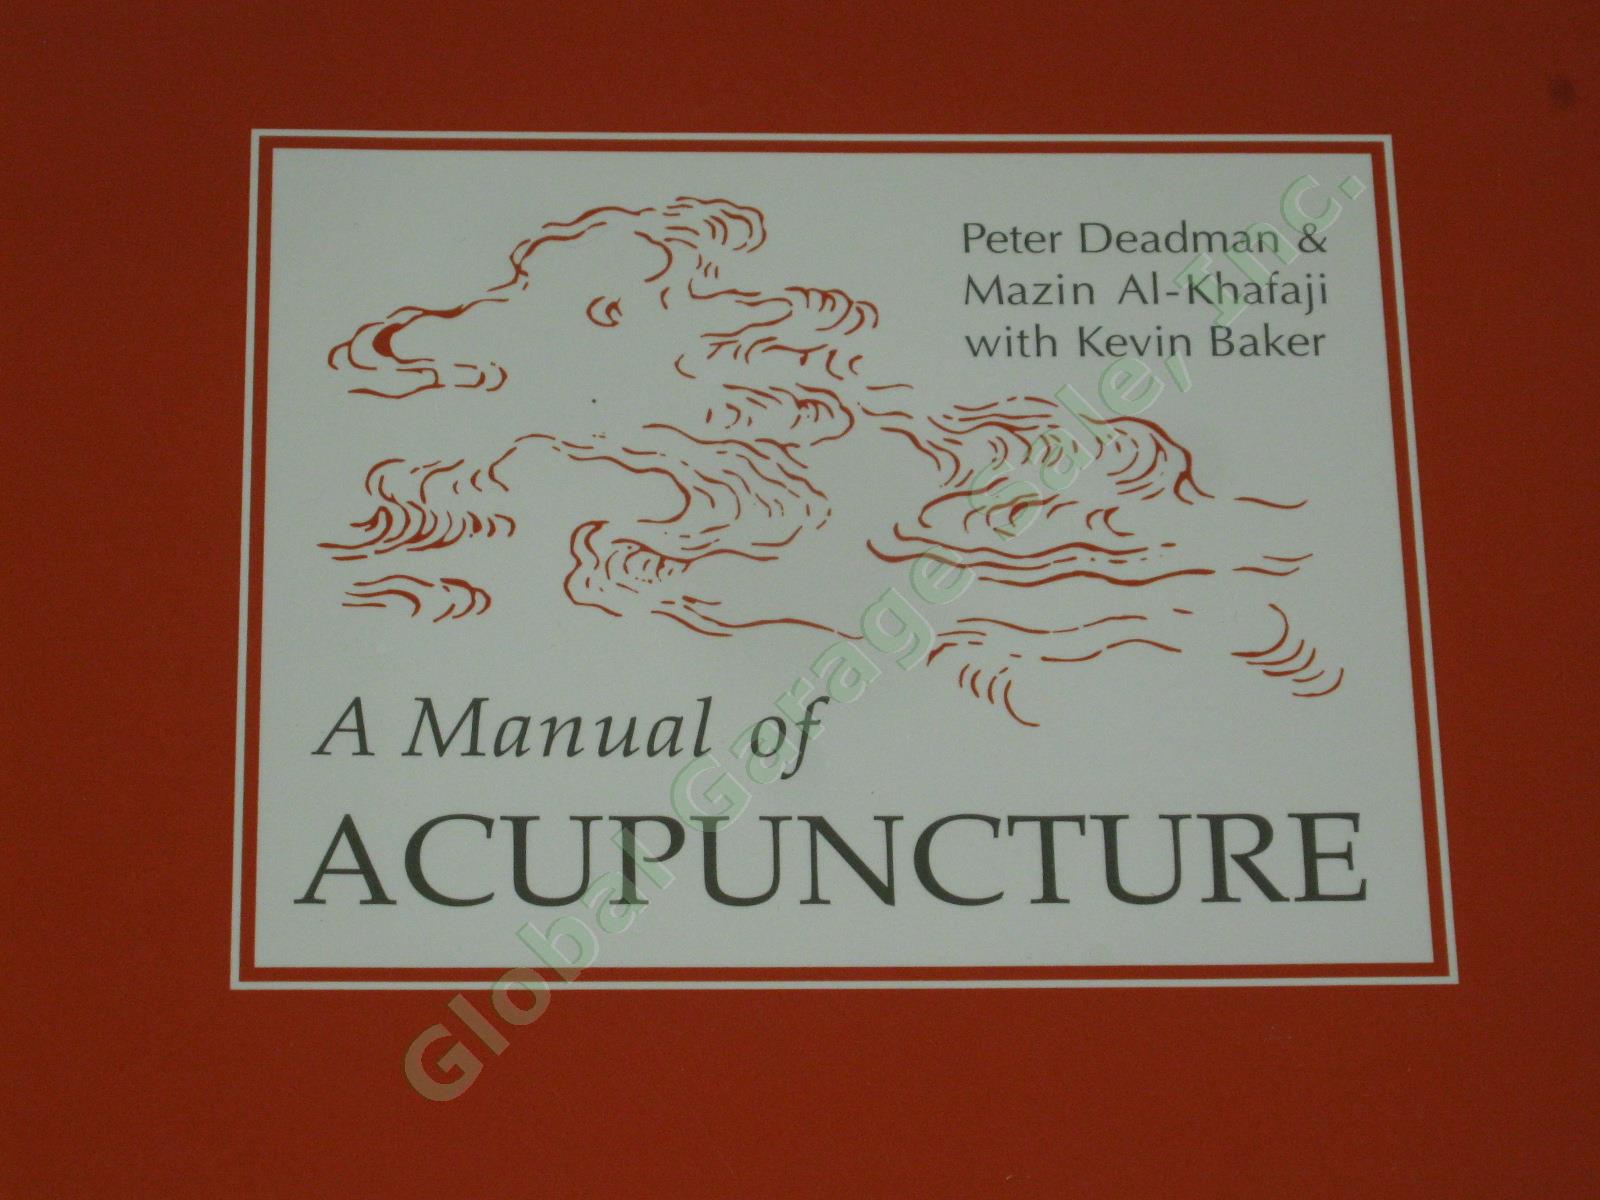 A Manual of Acupuncture 2012 Peter Deadman Mazin Al-Khafaji Kevin Baker EXC COND 1